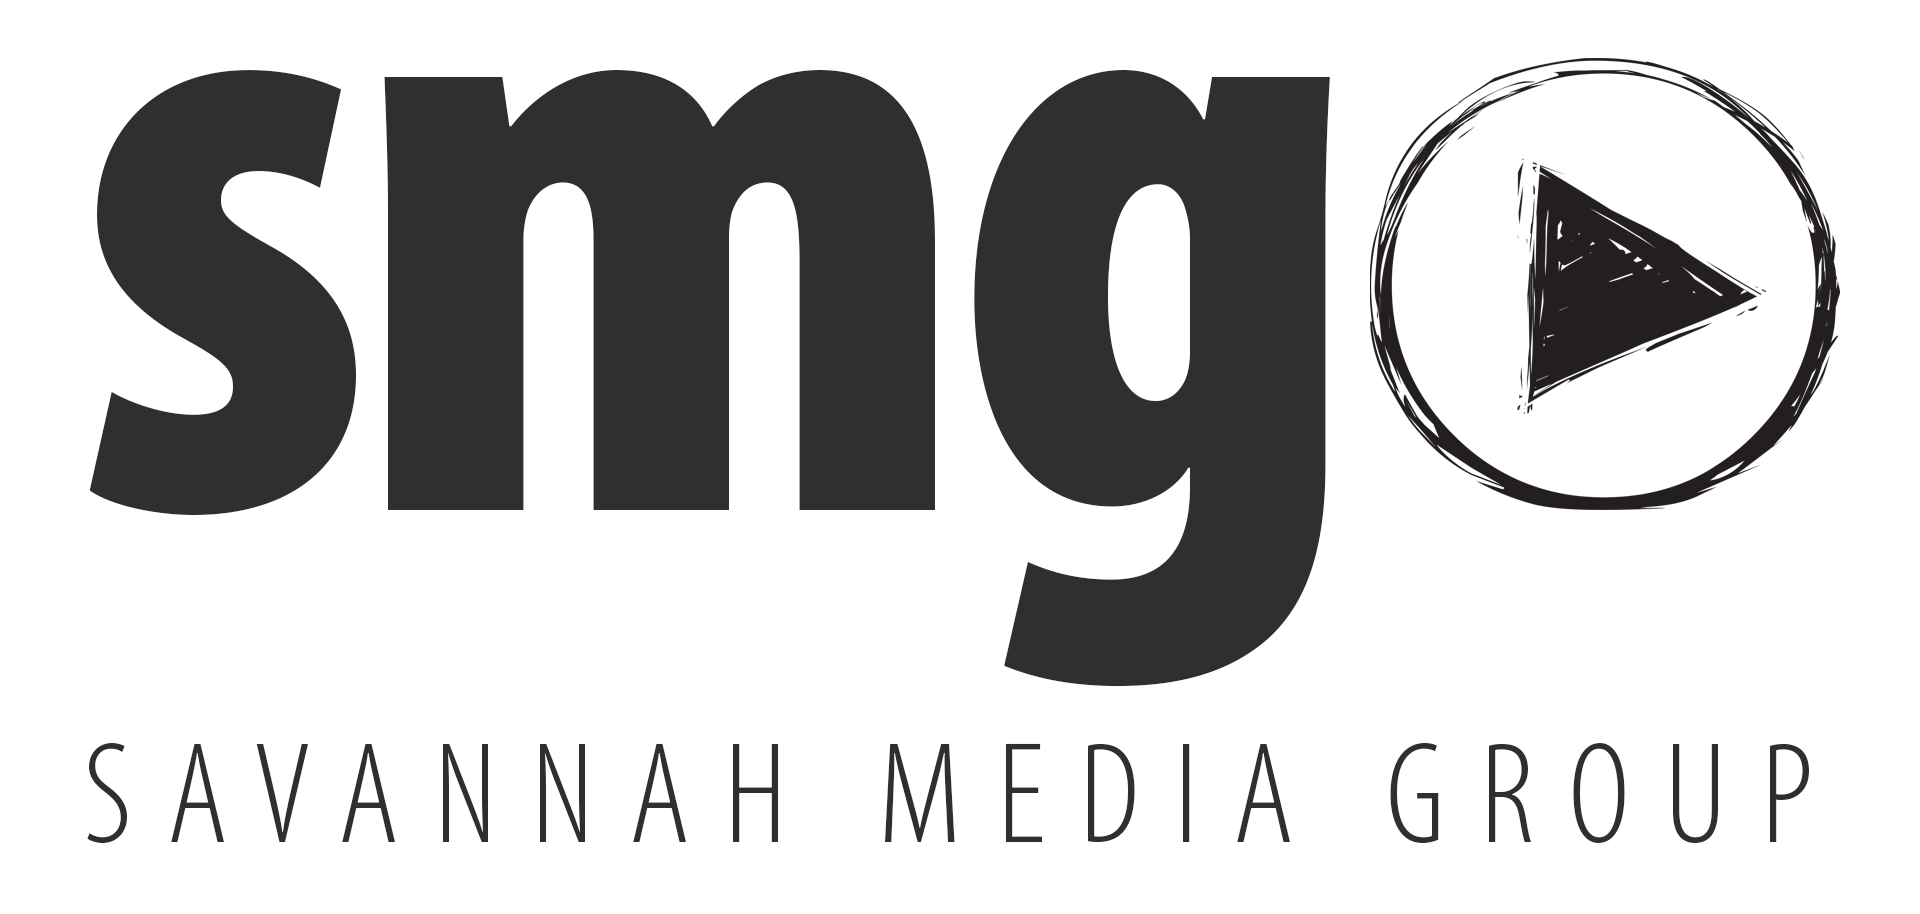 Savannah Media Group